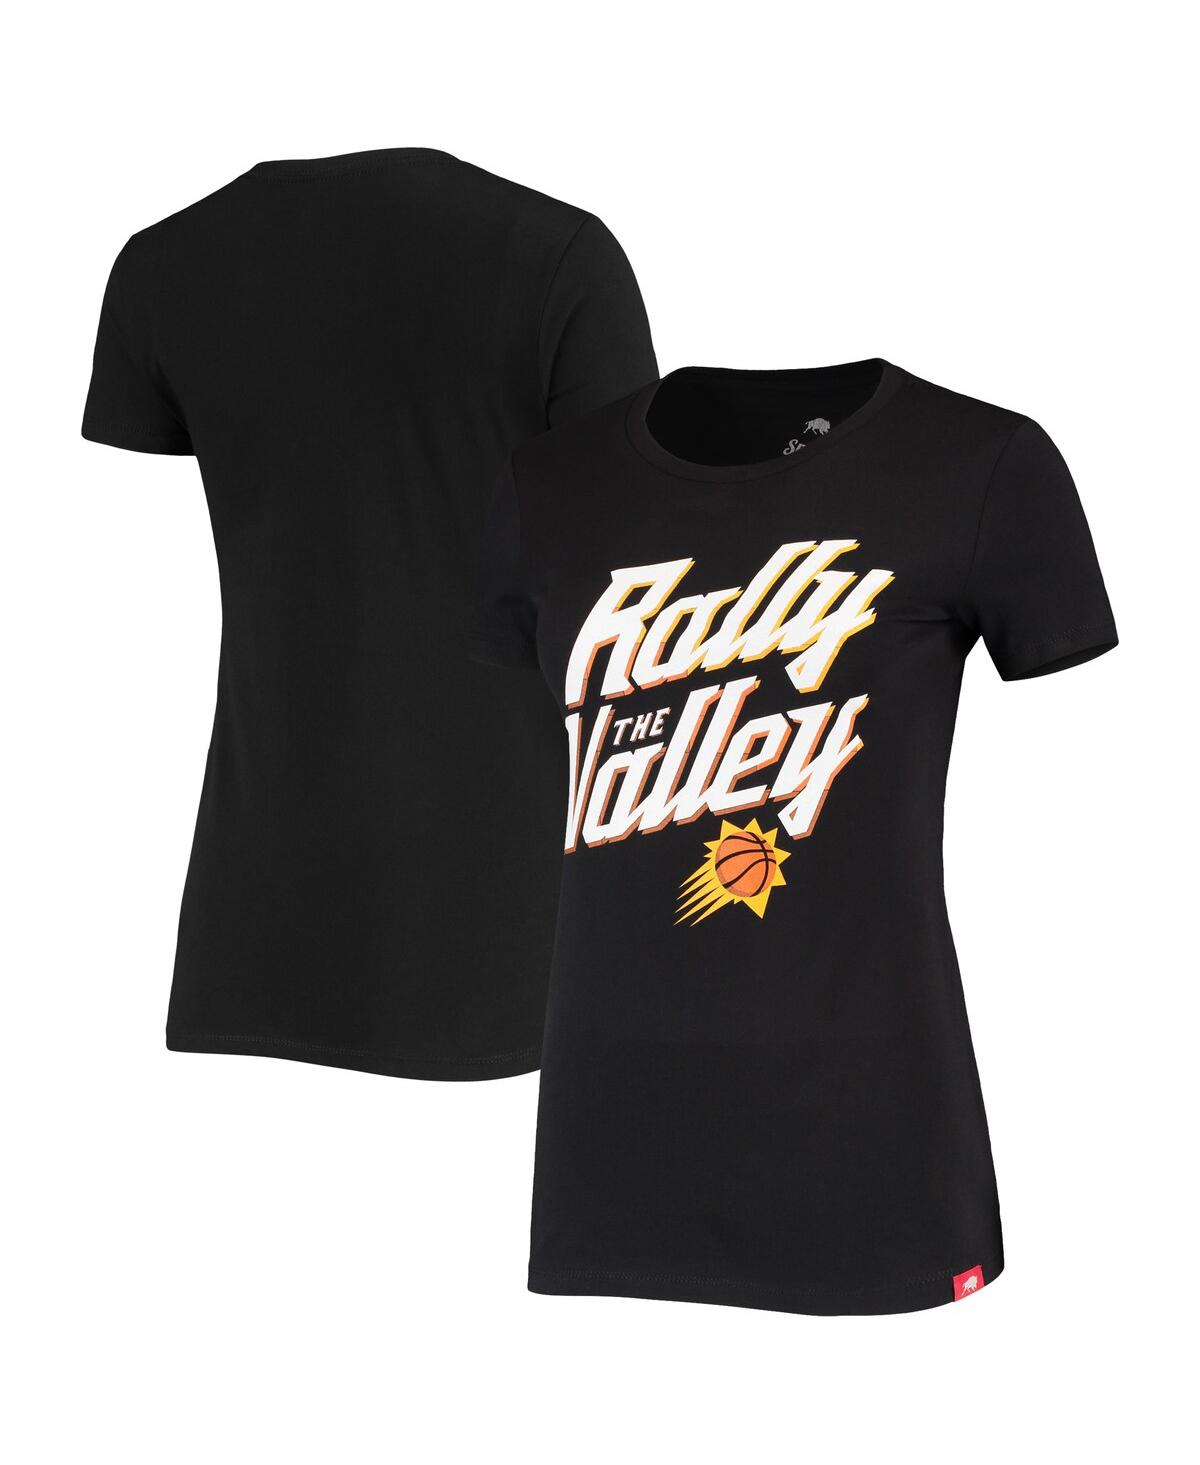 Women's Sportiqe Heathered Black Phoenix Suns Rally the Valley Davis T-shirt - Heathered Black